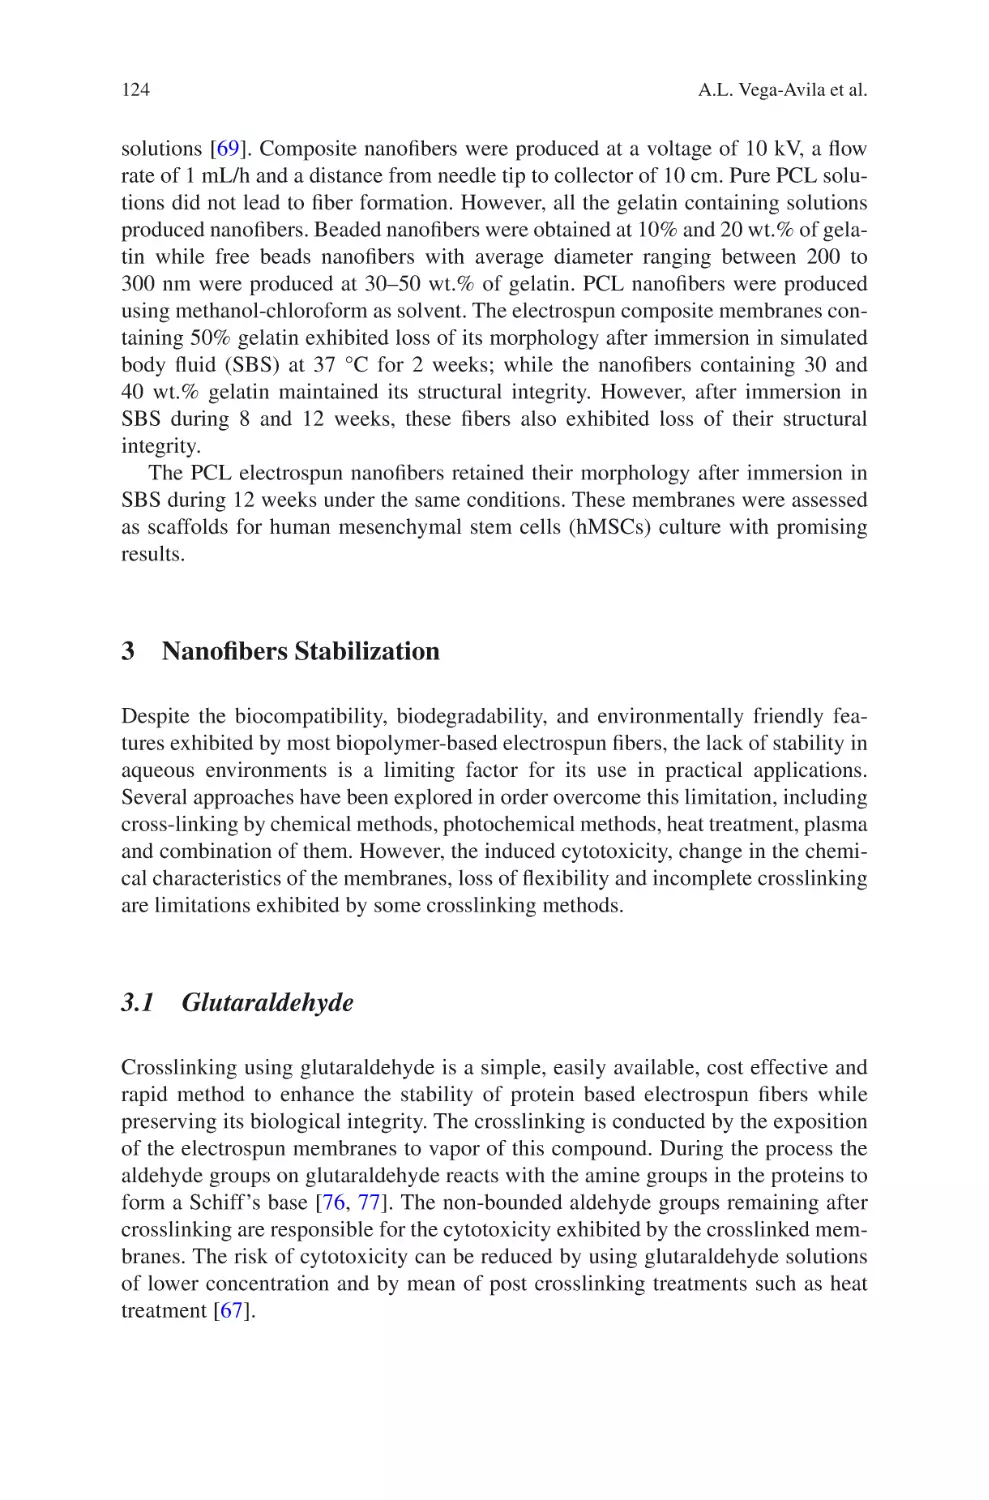 3 Nanofibers Stabilization
3.1 Glutaraldehyde